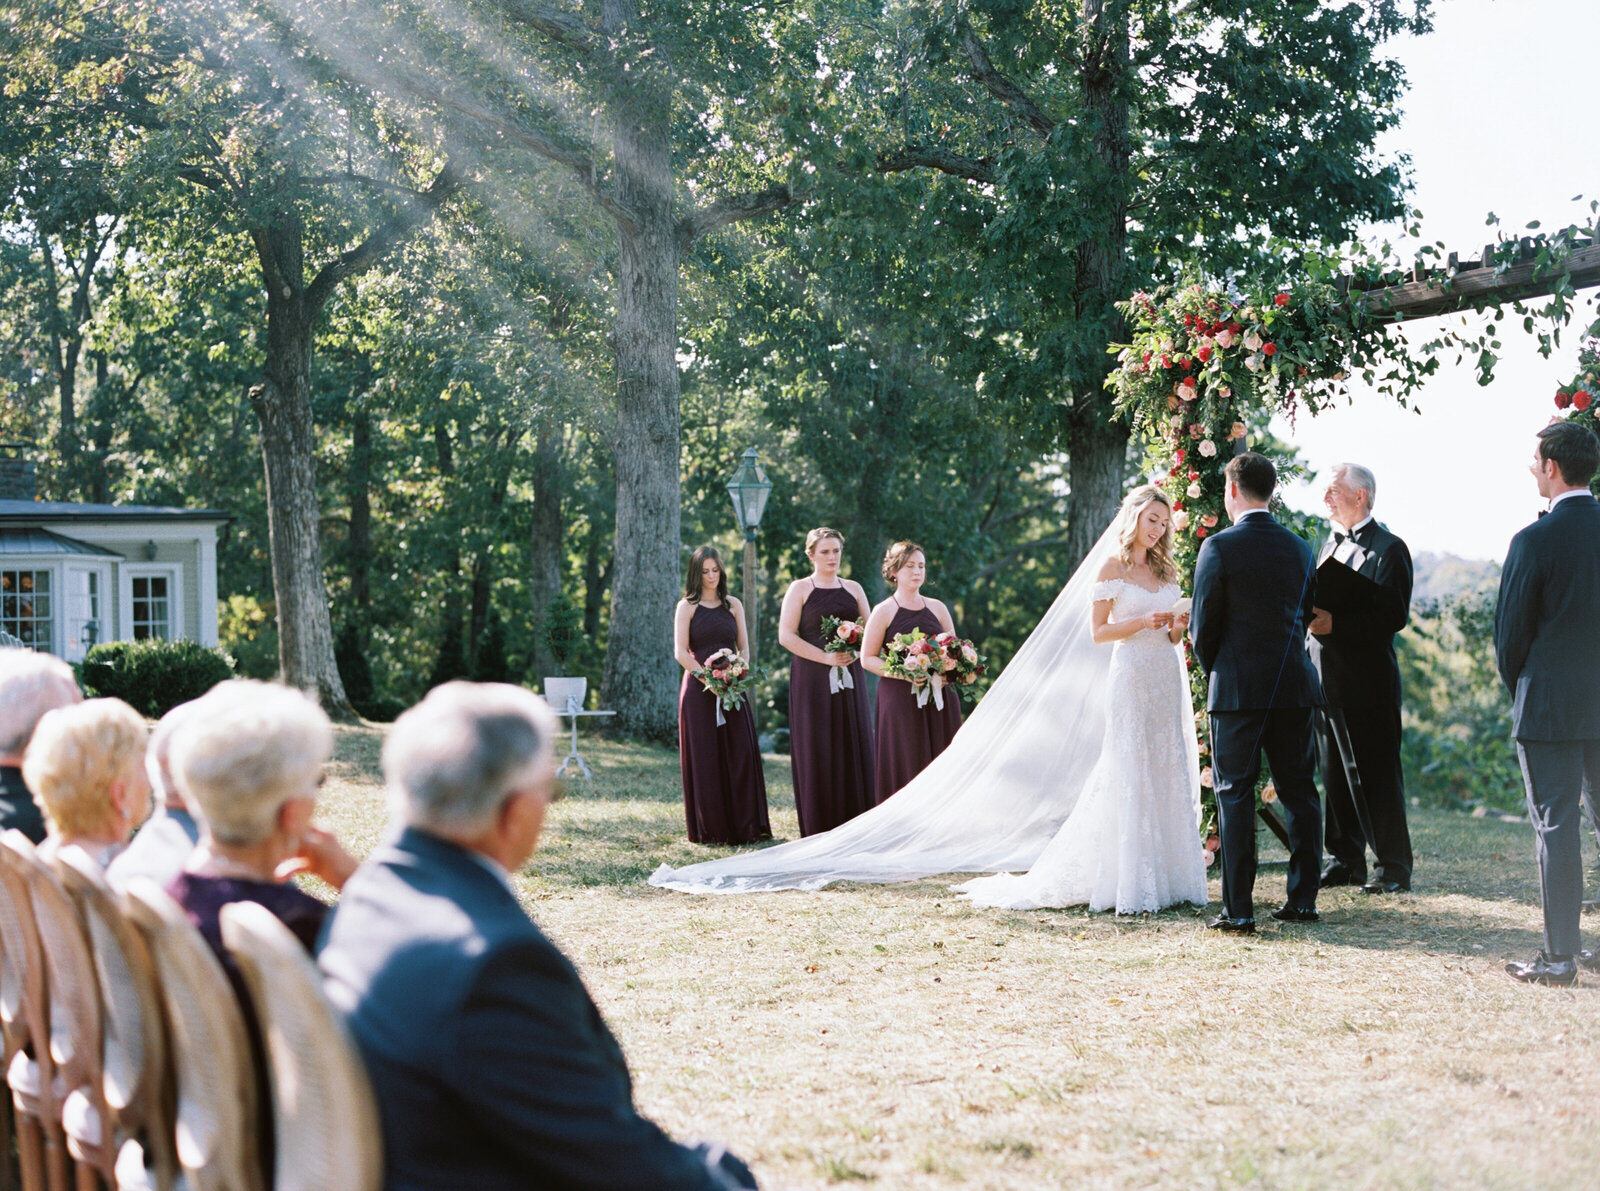 Virginia wedding photographer film photography Natalie Jayne Photography